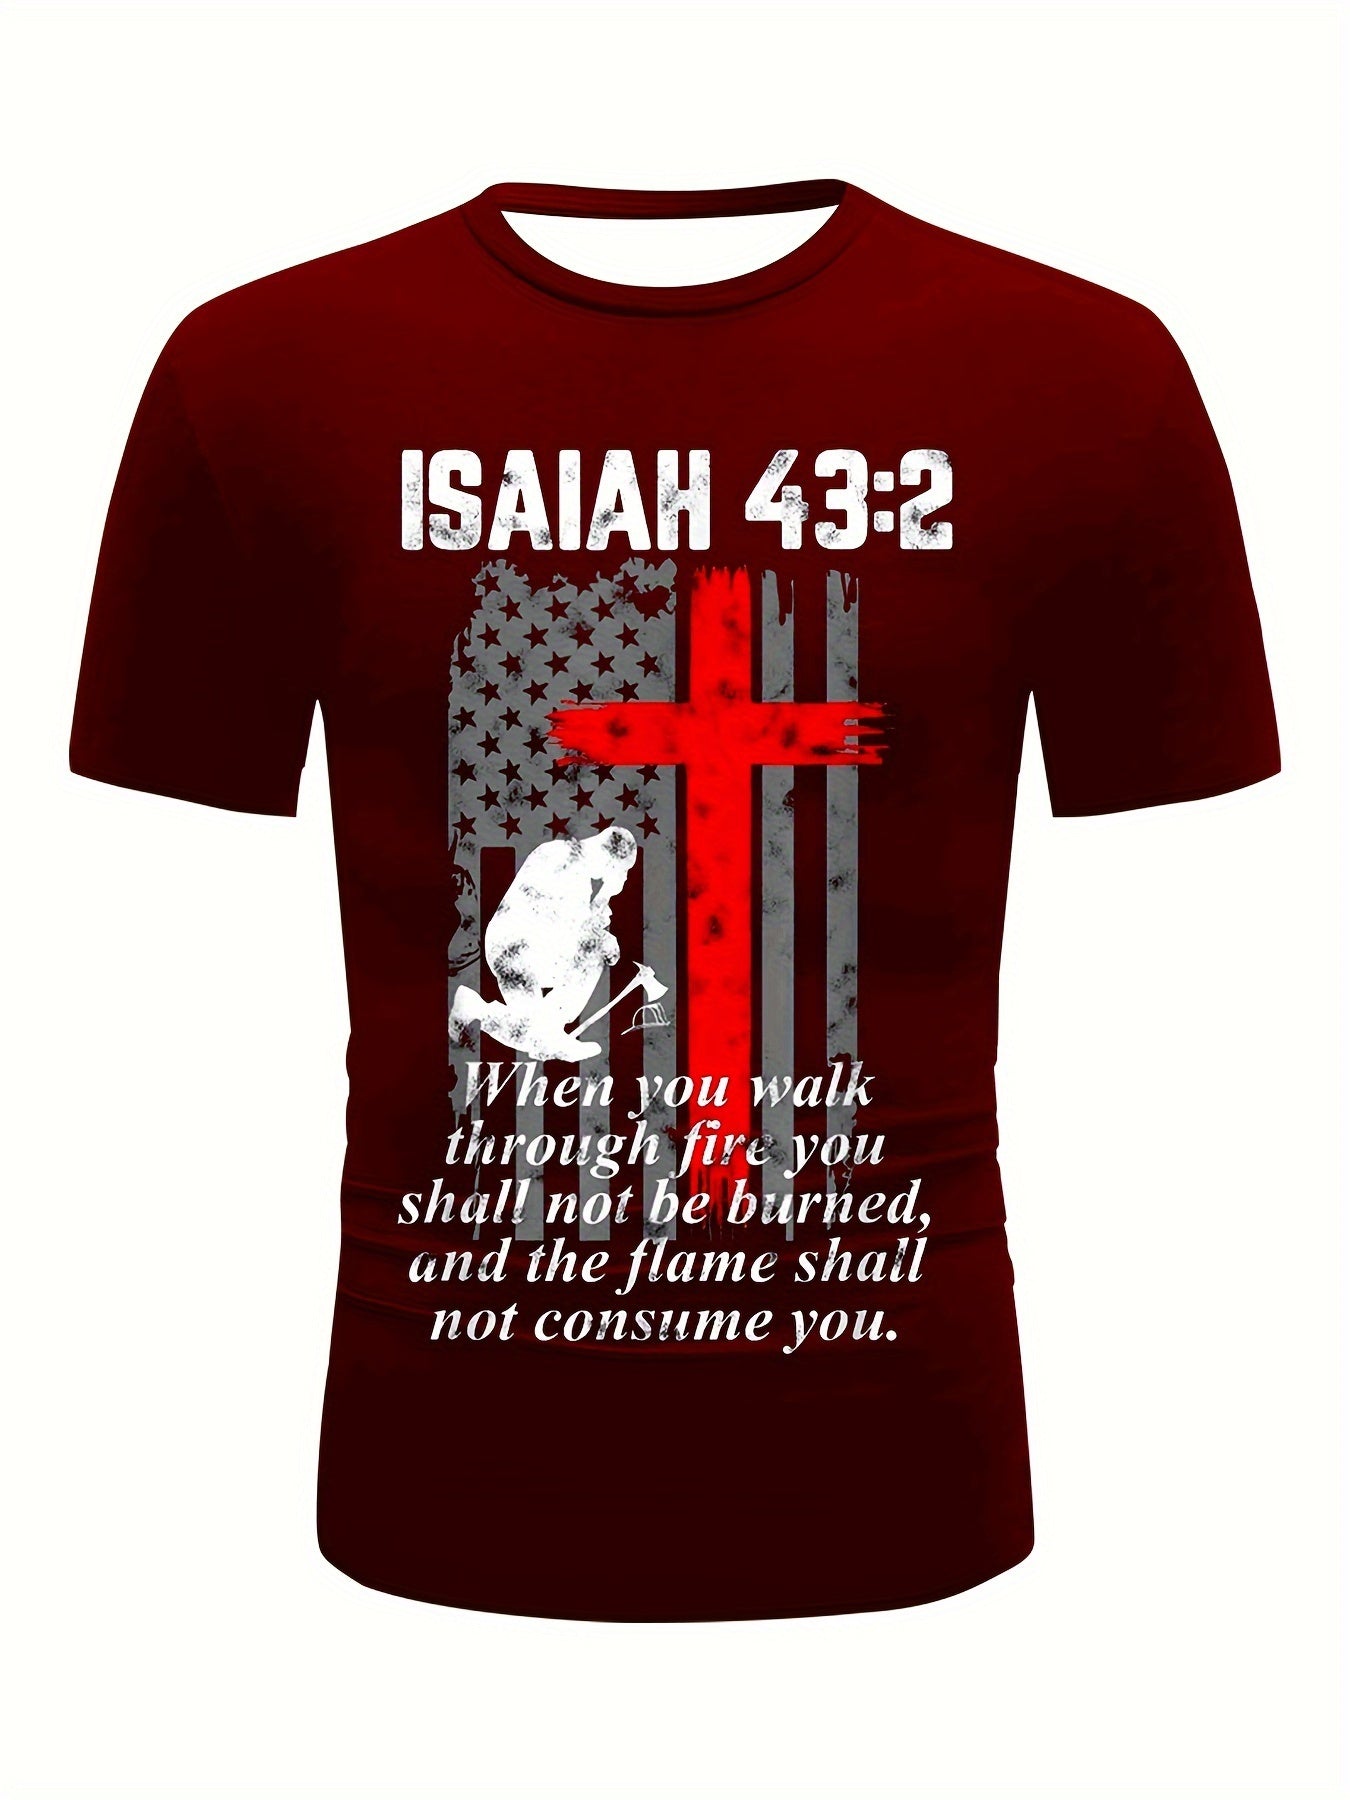 Isaiah 43:2 Men's Christian T-shirt claimedbygoddesigns